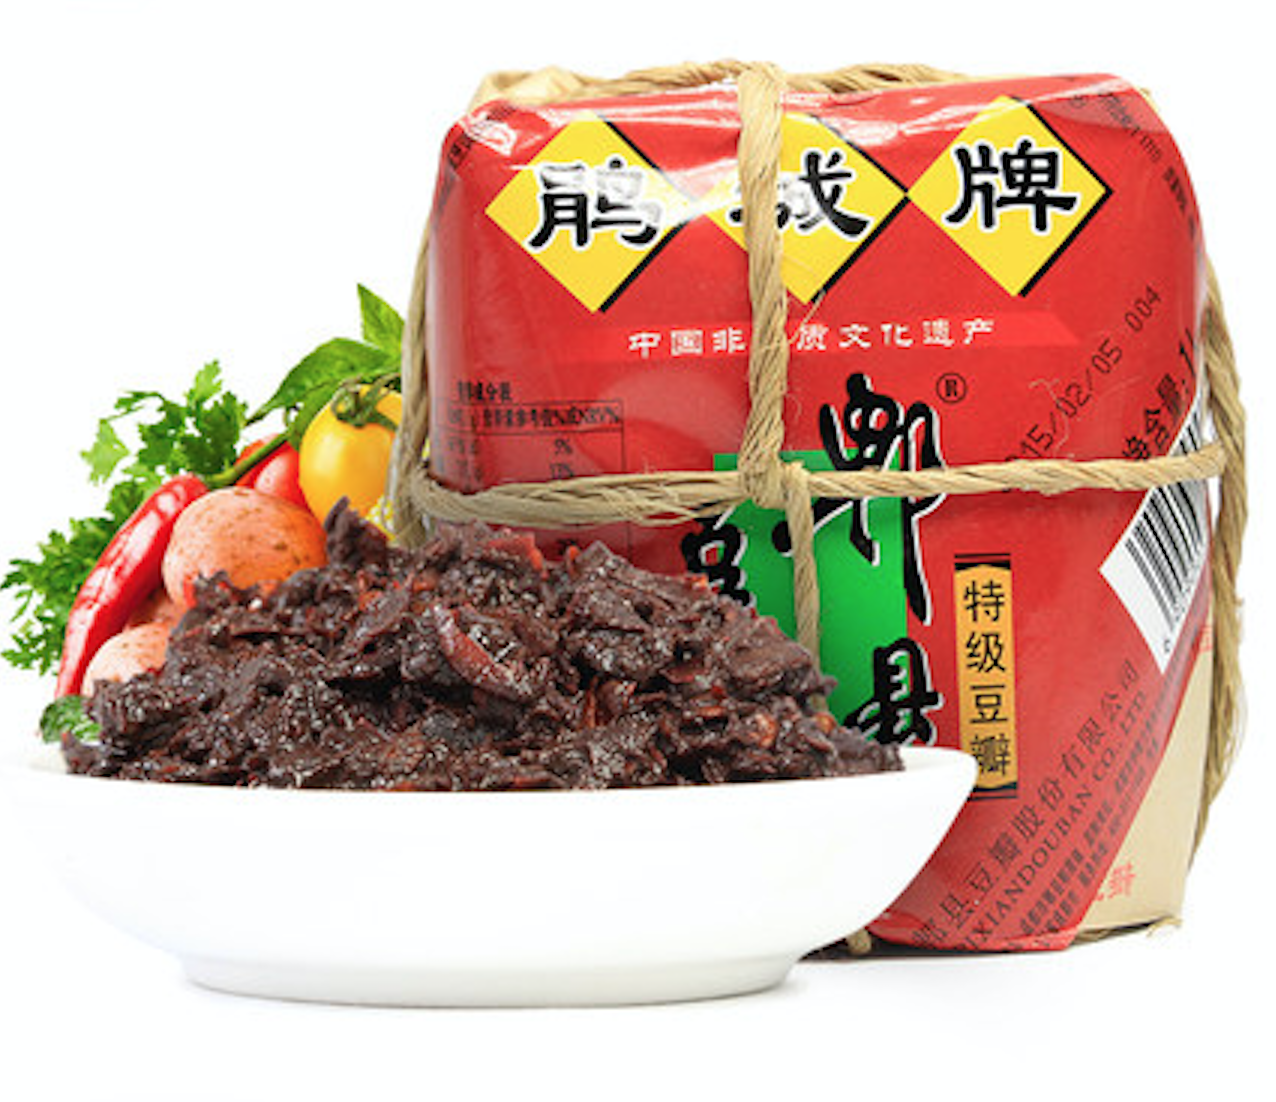 Juan Cheng Pixian Douban Chili Bean Paste Set + Lao Gan Ma Chili Oil Sets | 豆瓣优惠套装组